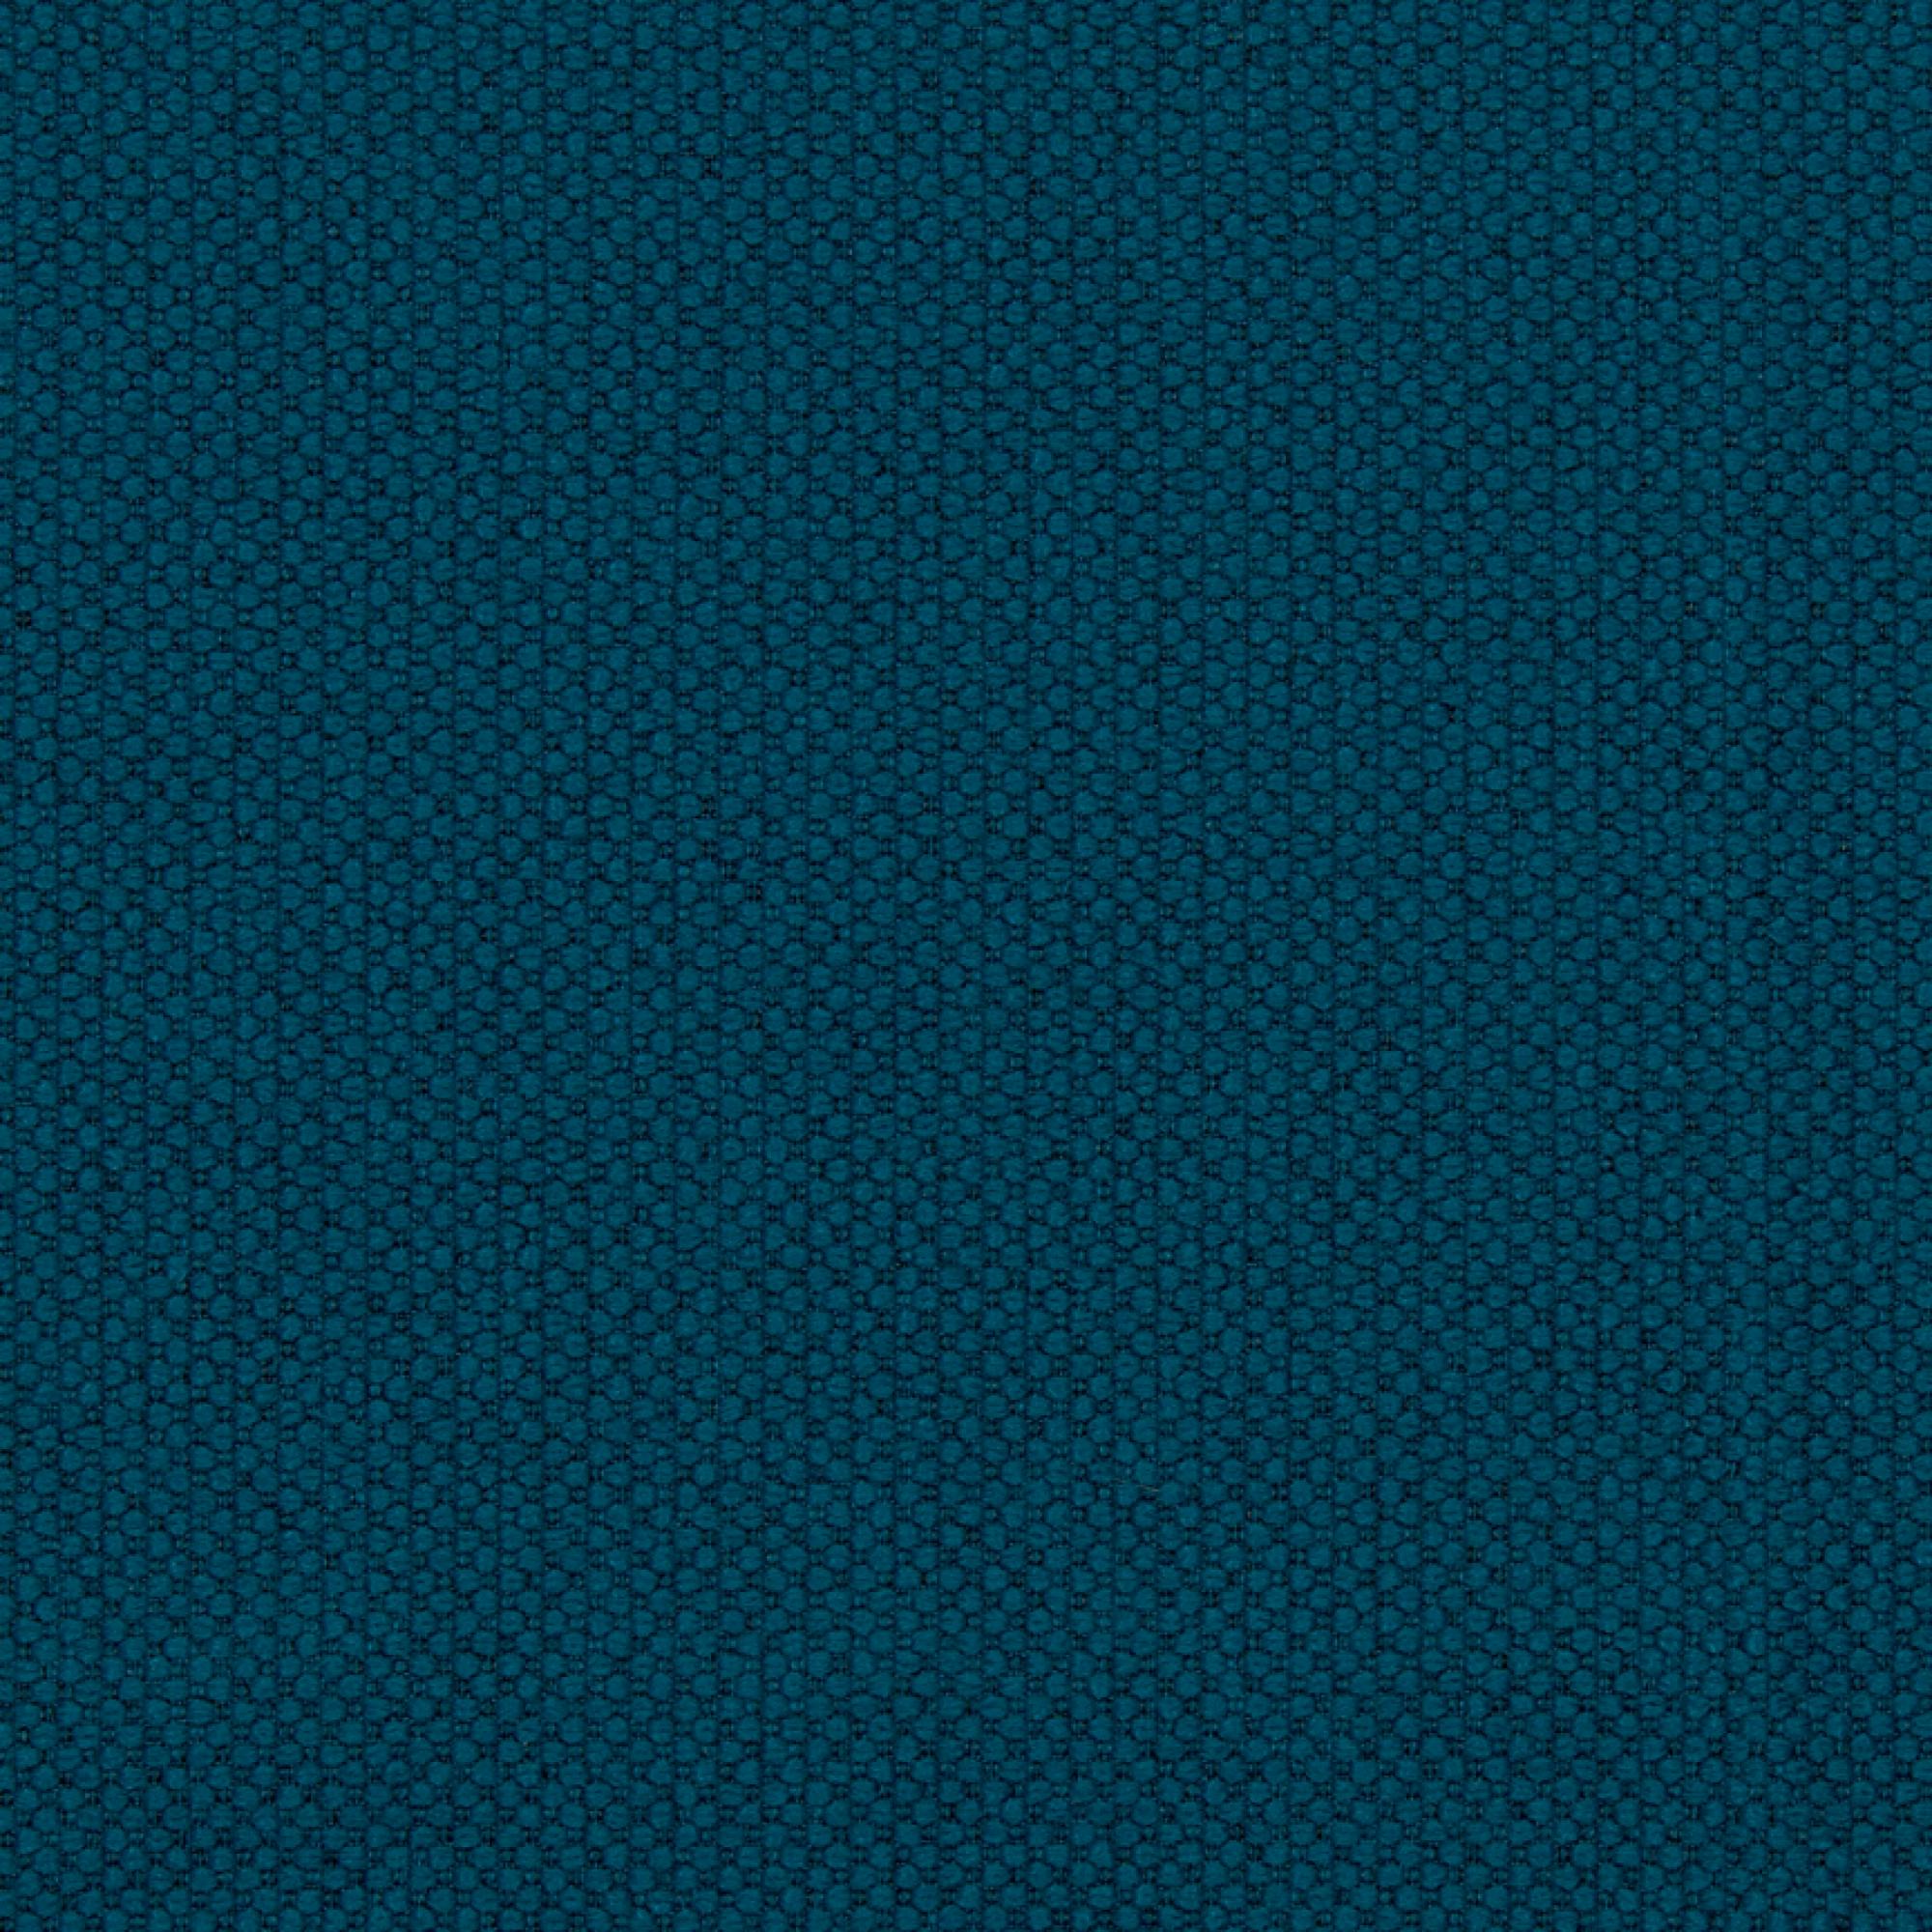 Fabric sample Merit 0015 blue